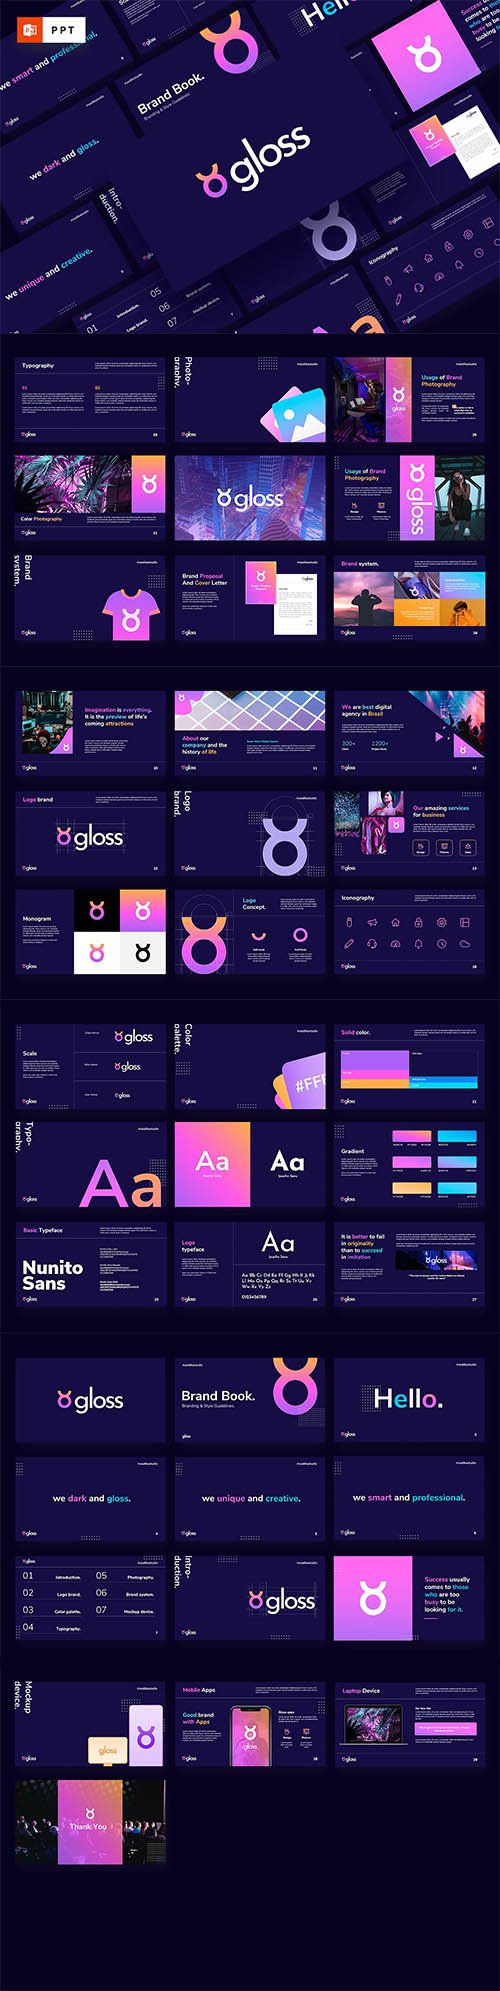 GLOSS - Dark Branding Style Powerpoint Template